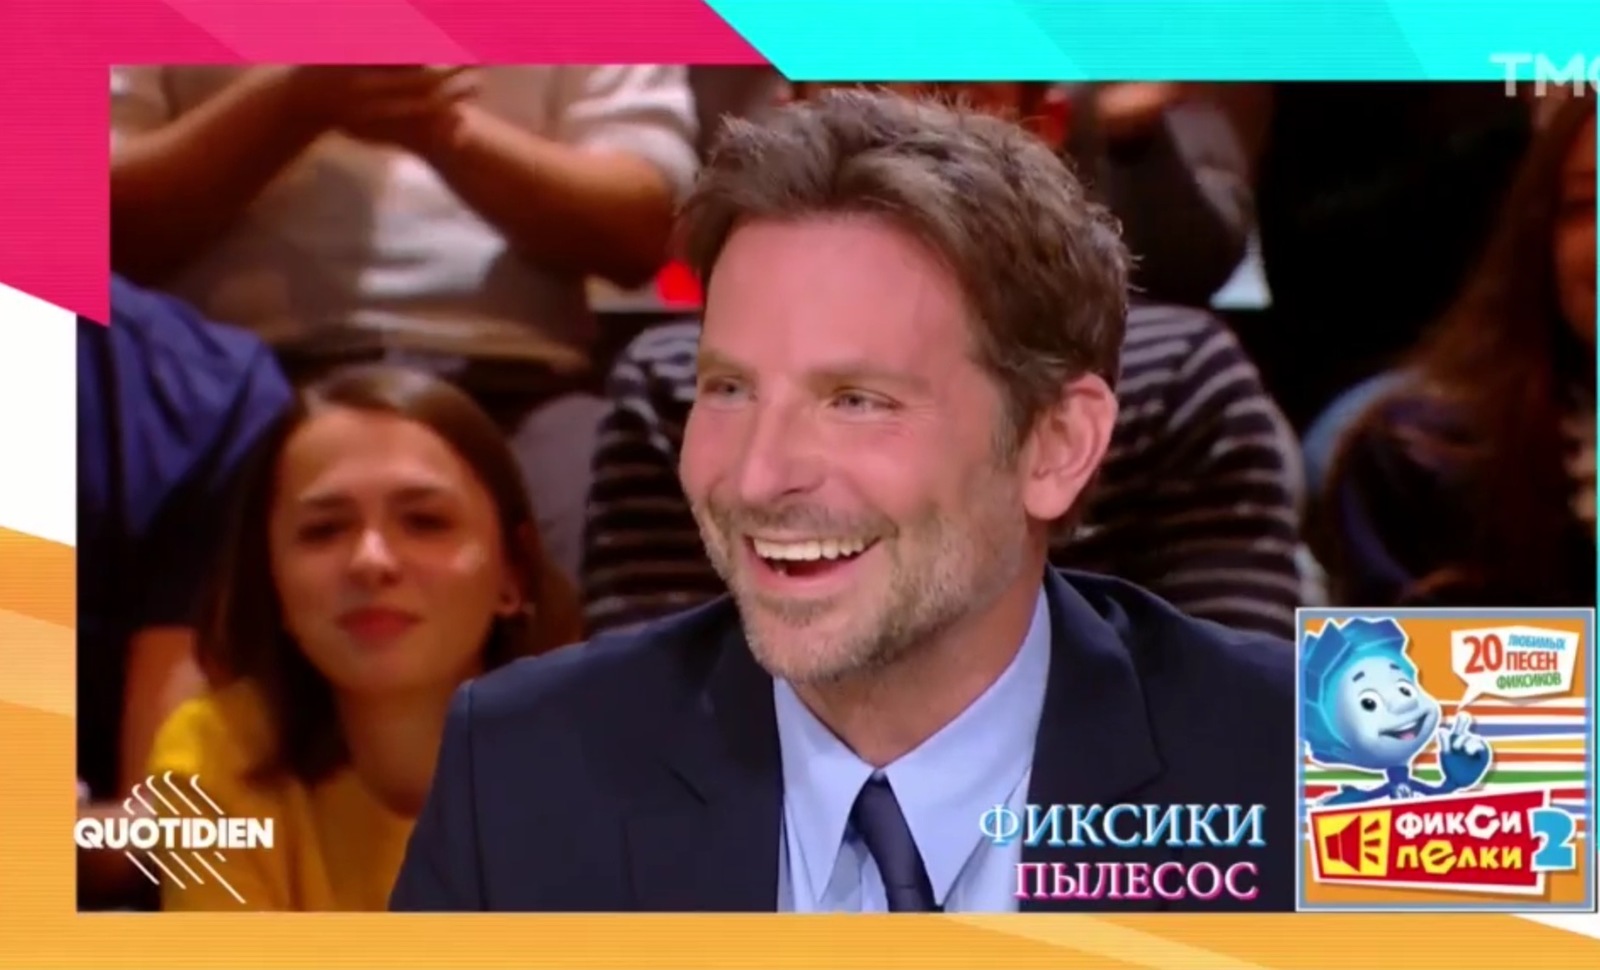 Bradley Cooper and Russian children's songs - My, Bradley Cooper, Irina Shayk, Funny, Humor, Longpost, Video, Celebrities